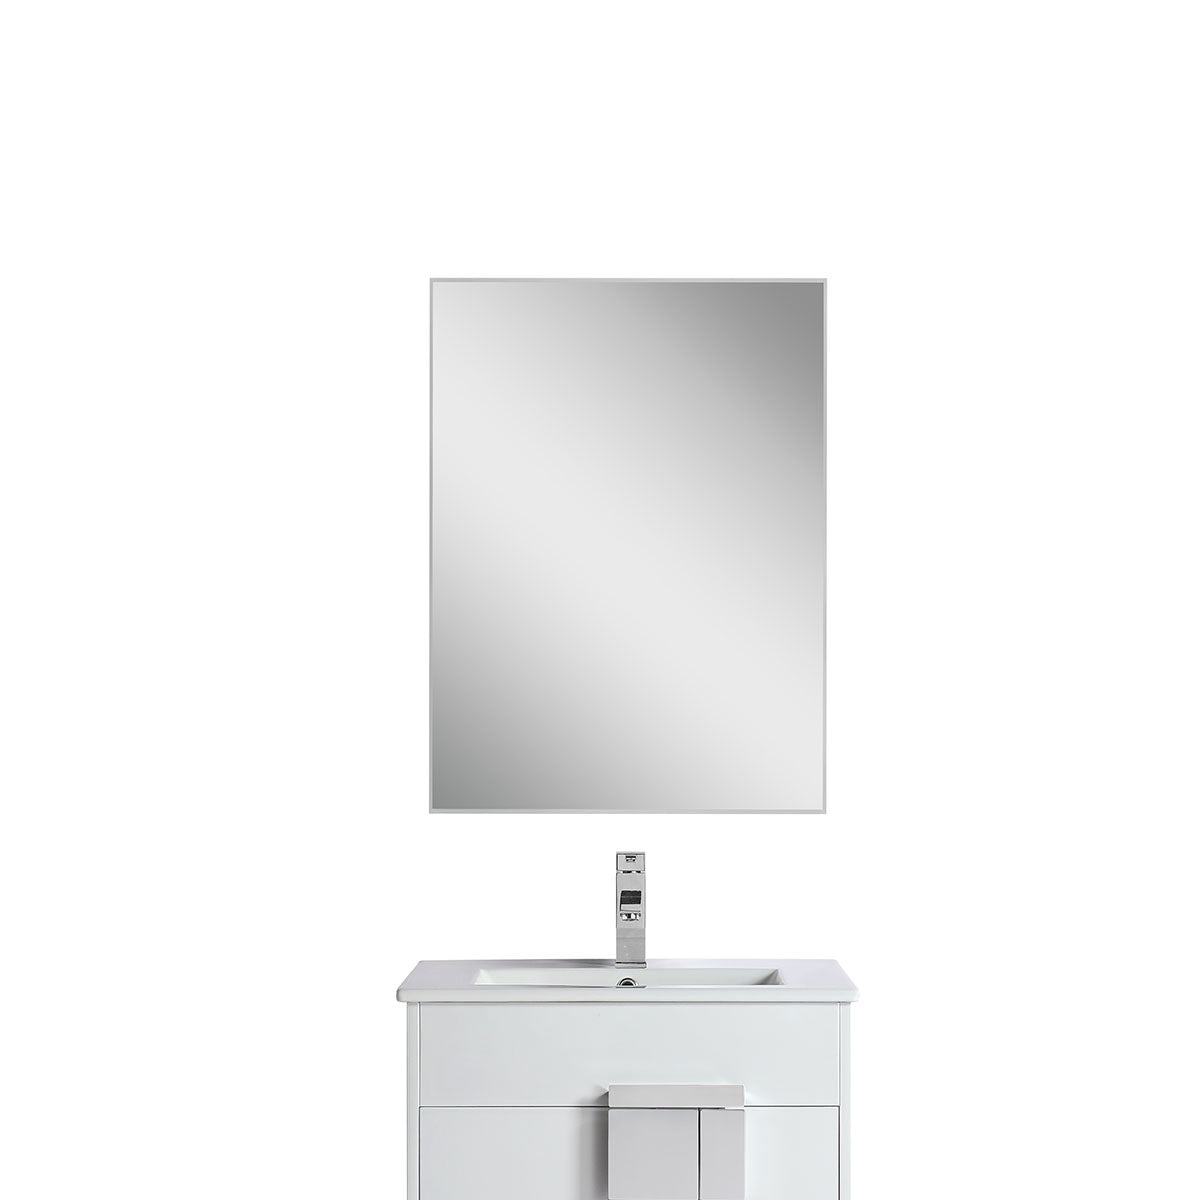 24"w  x 32" h Aluminum Rectangle Bathroom Wall-Mirror Series (Silver) - iStyle Bath